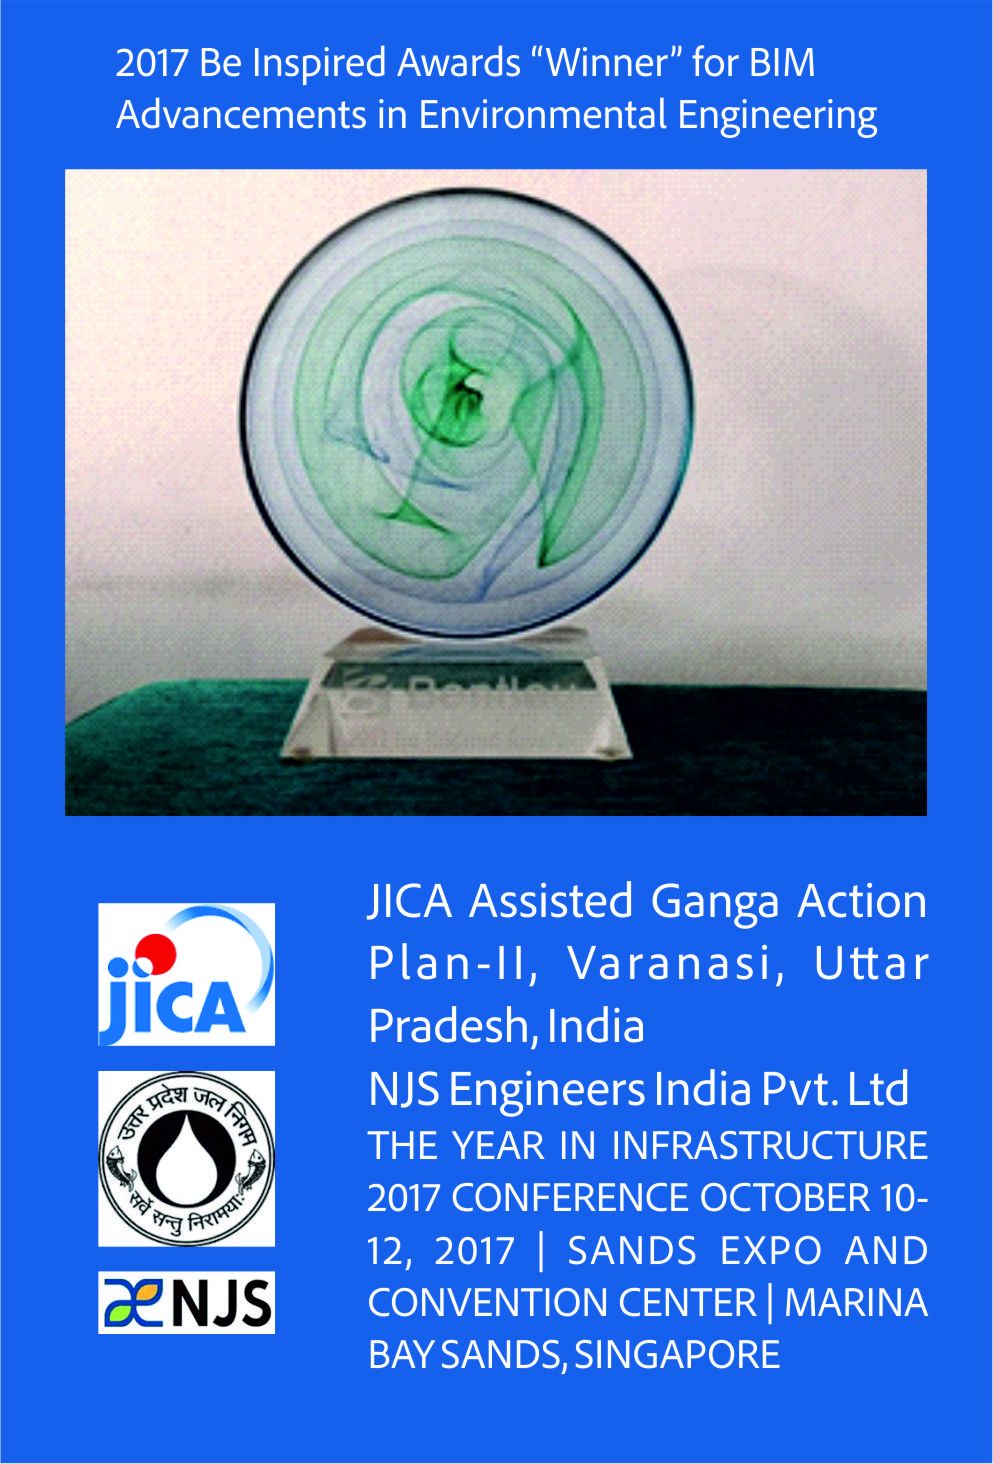 JICA Assisted Ganga Action plan-II, Varanasi